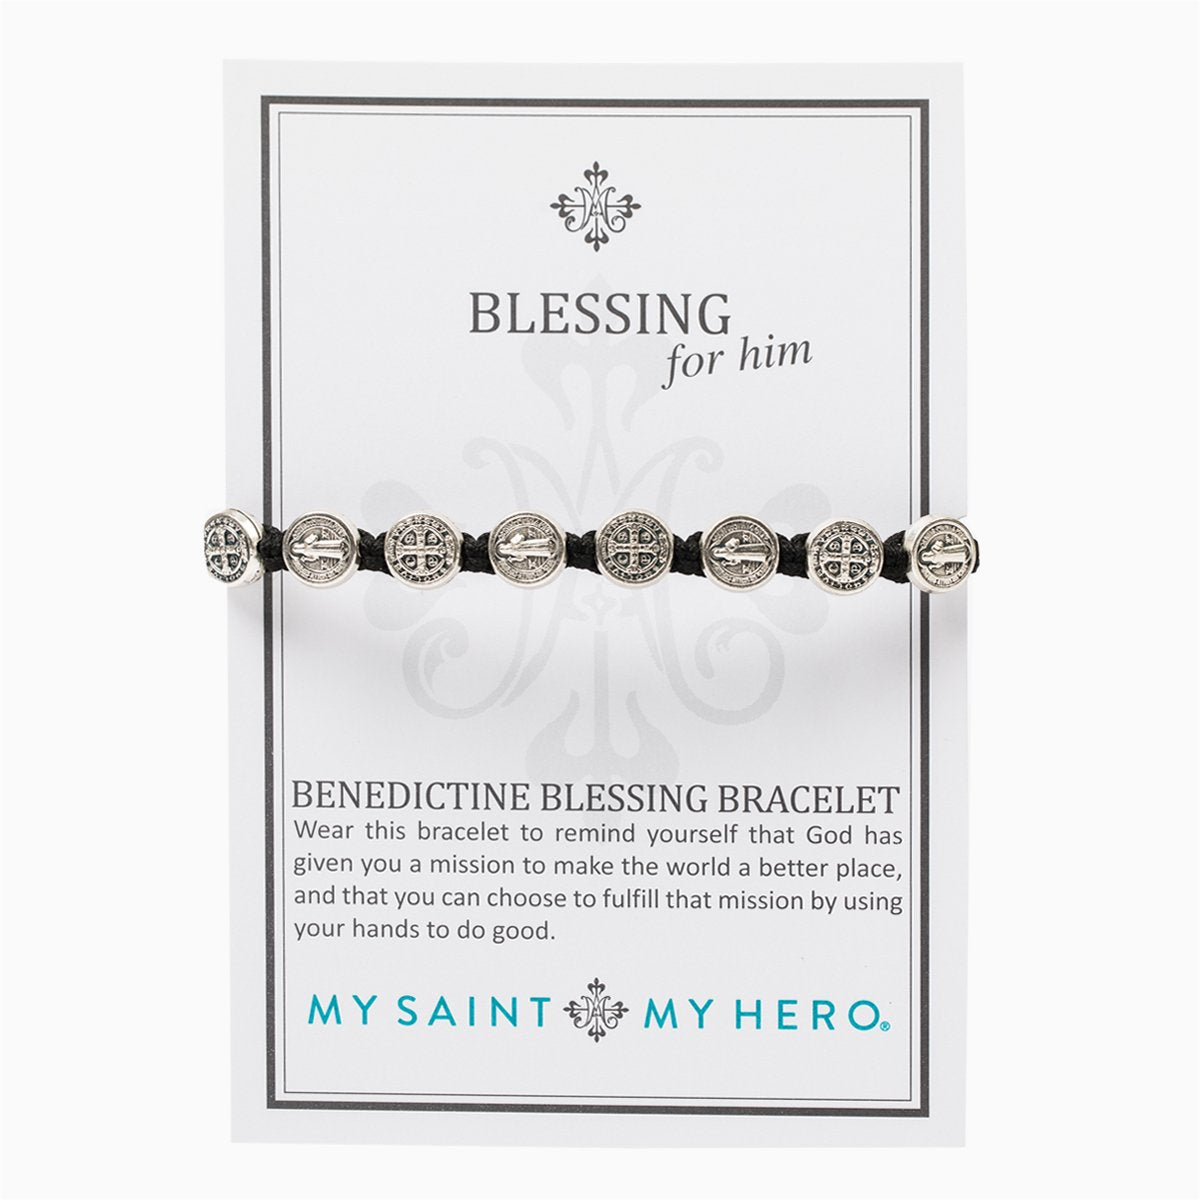 Benedictine Blessing Bracelet for Him